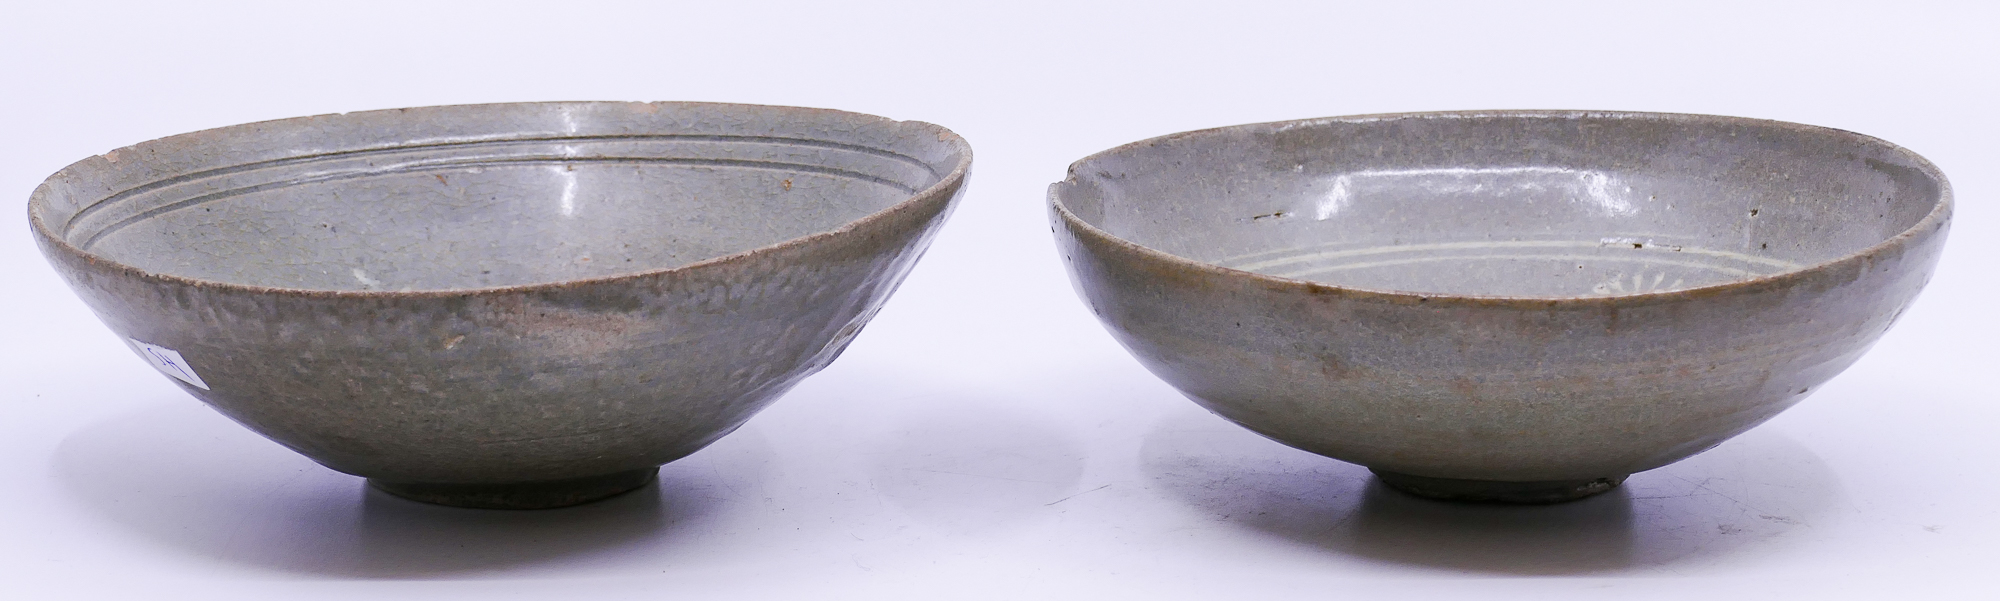 2pc Korean Goryeo Celadon Bowls  2d9e2c